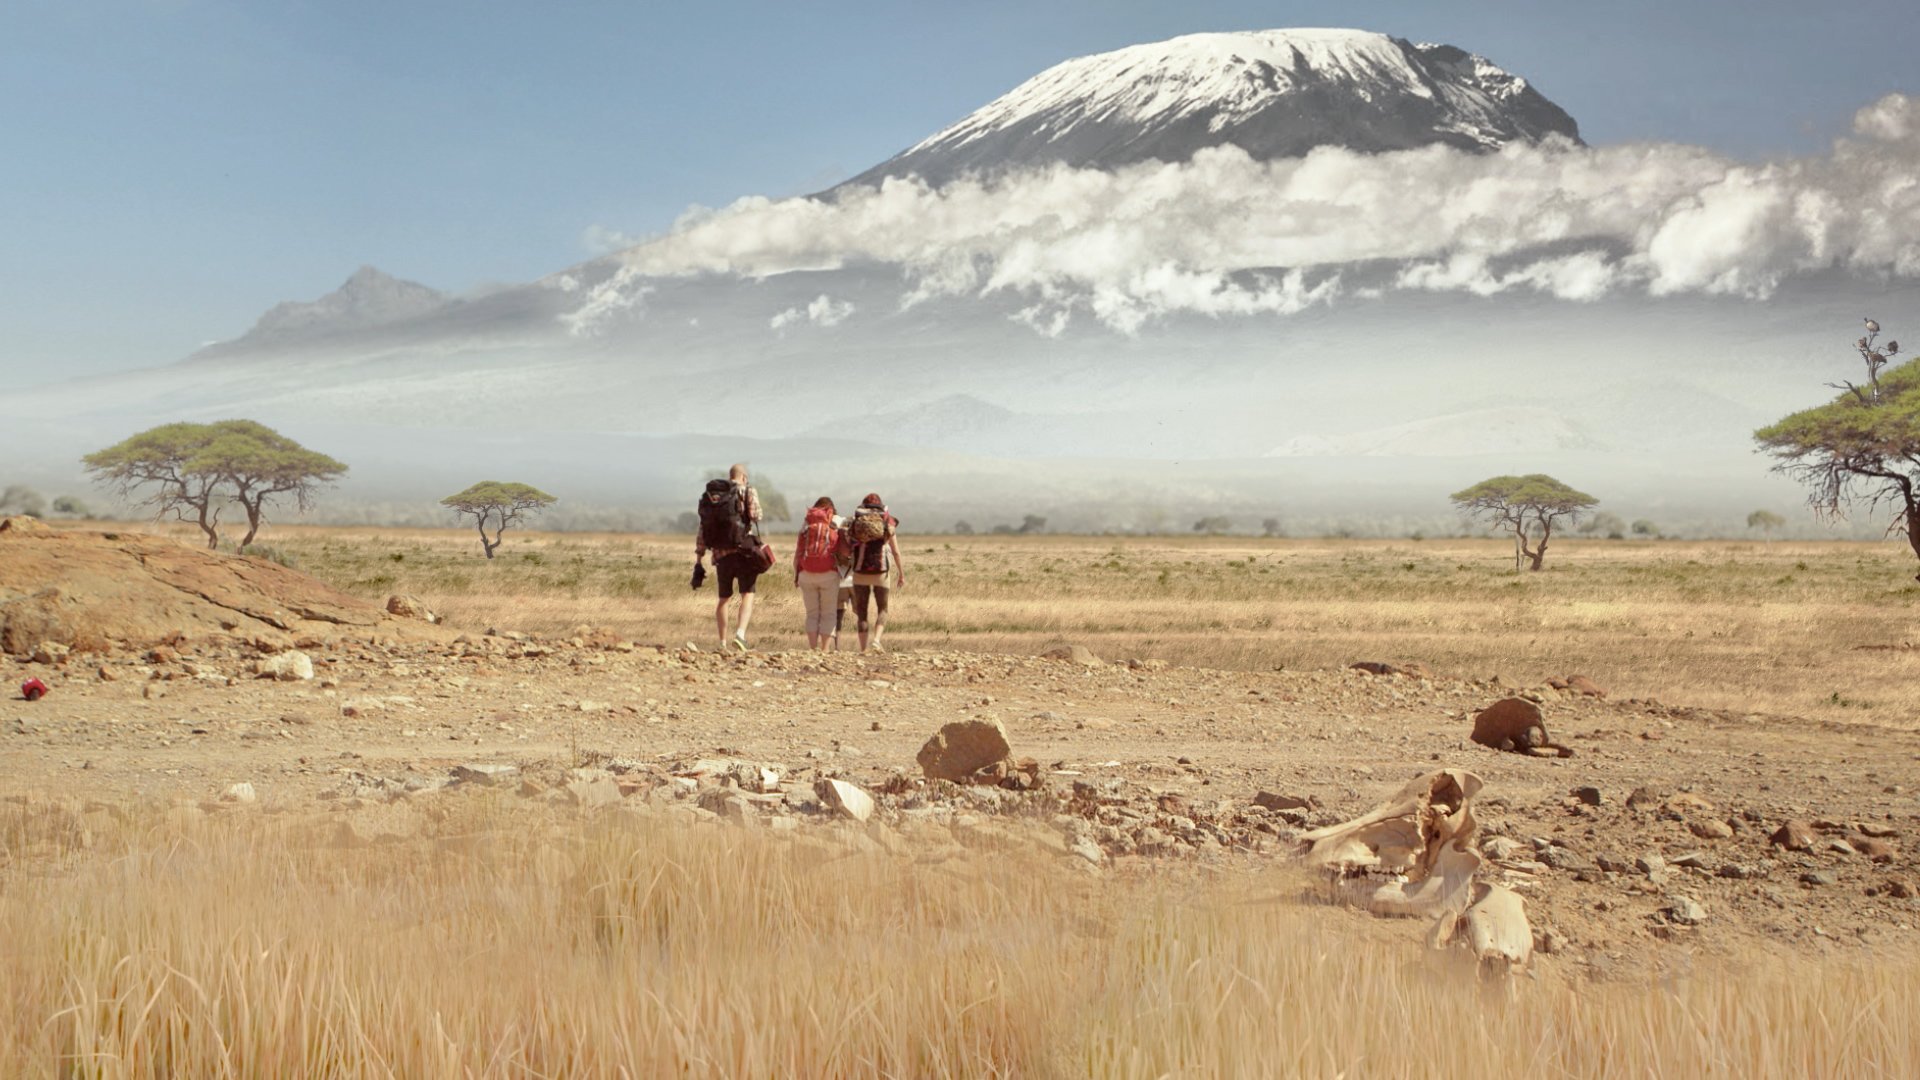 Kilimanjaro donde esta